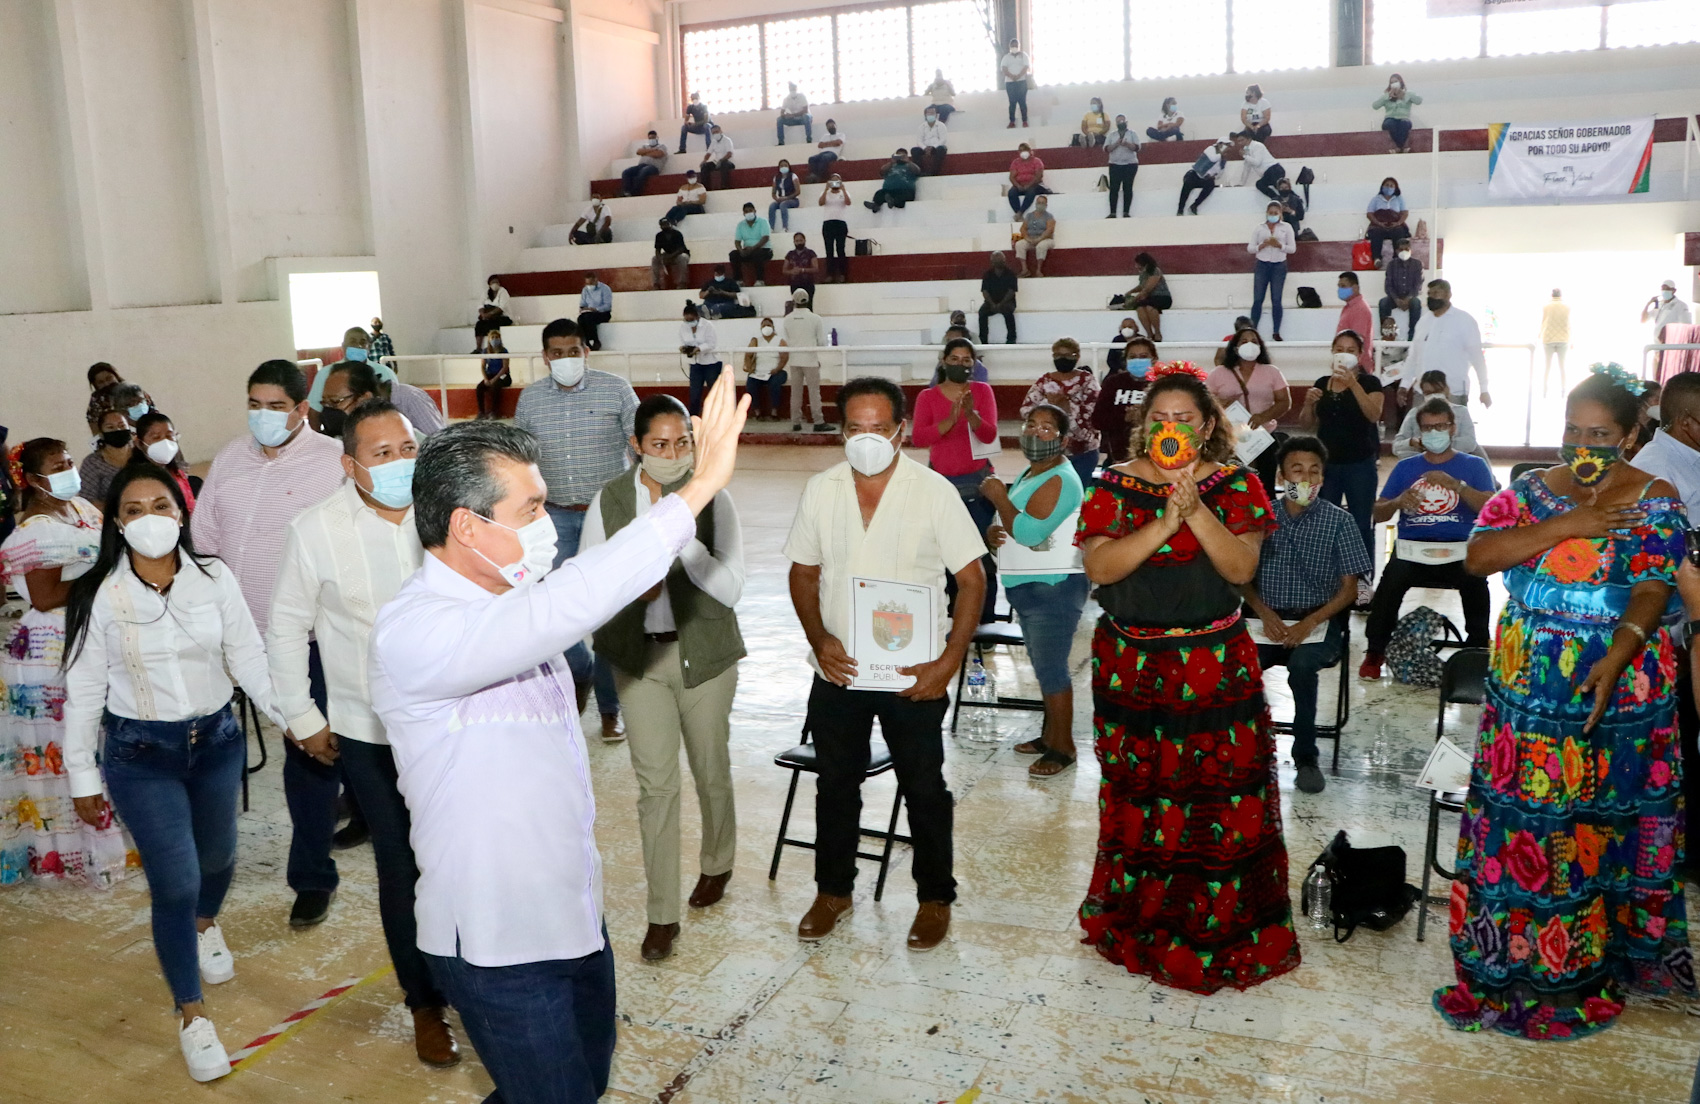 Luego de 20 años de espera, 135 familias reciben escrituras públicas en Arriaga